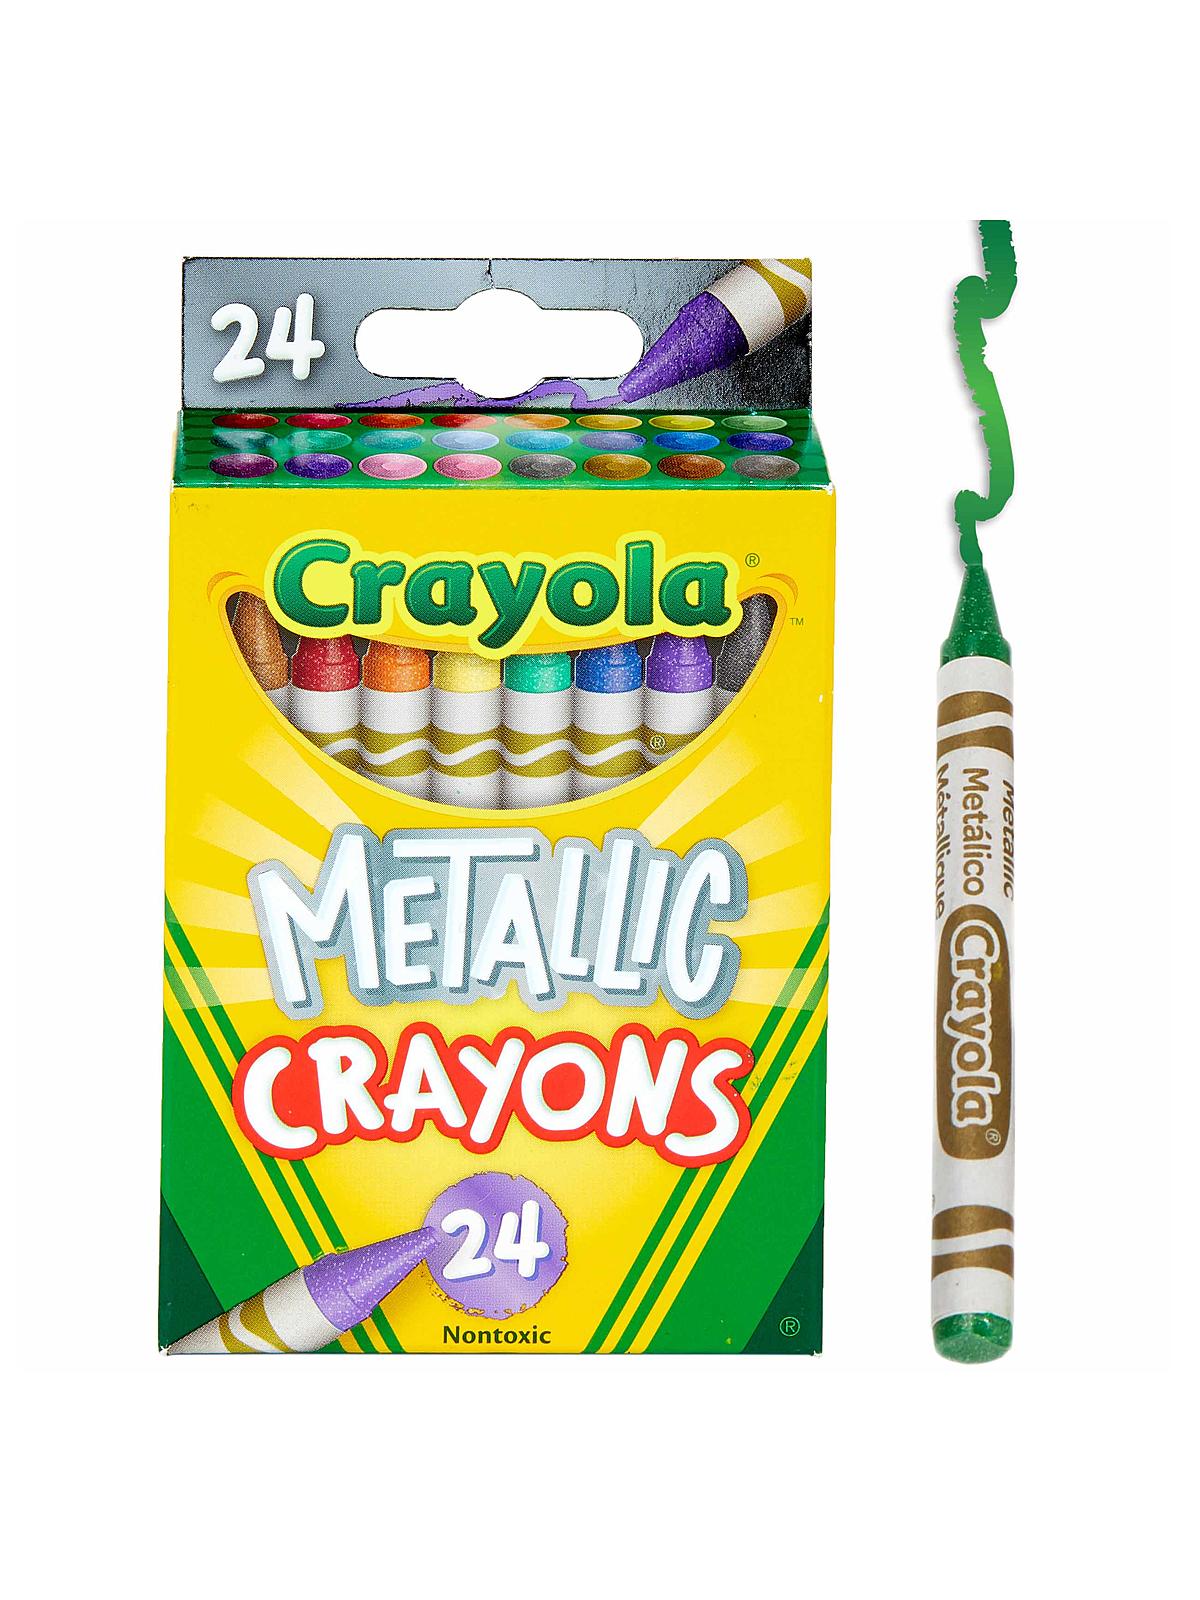 Metallic Crayons Pack Of 24